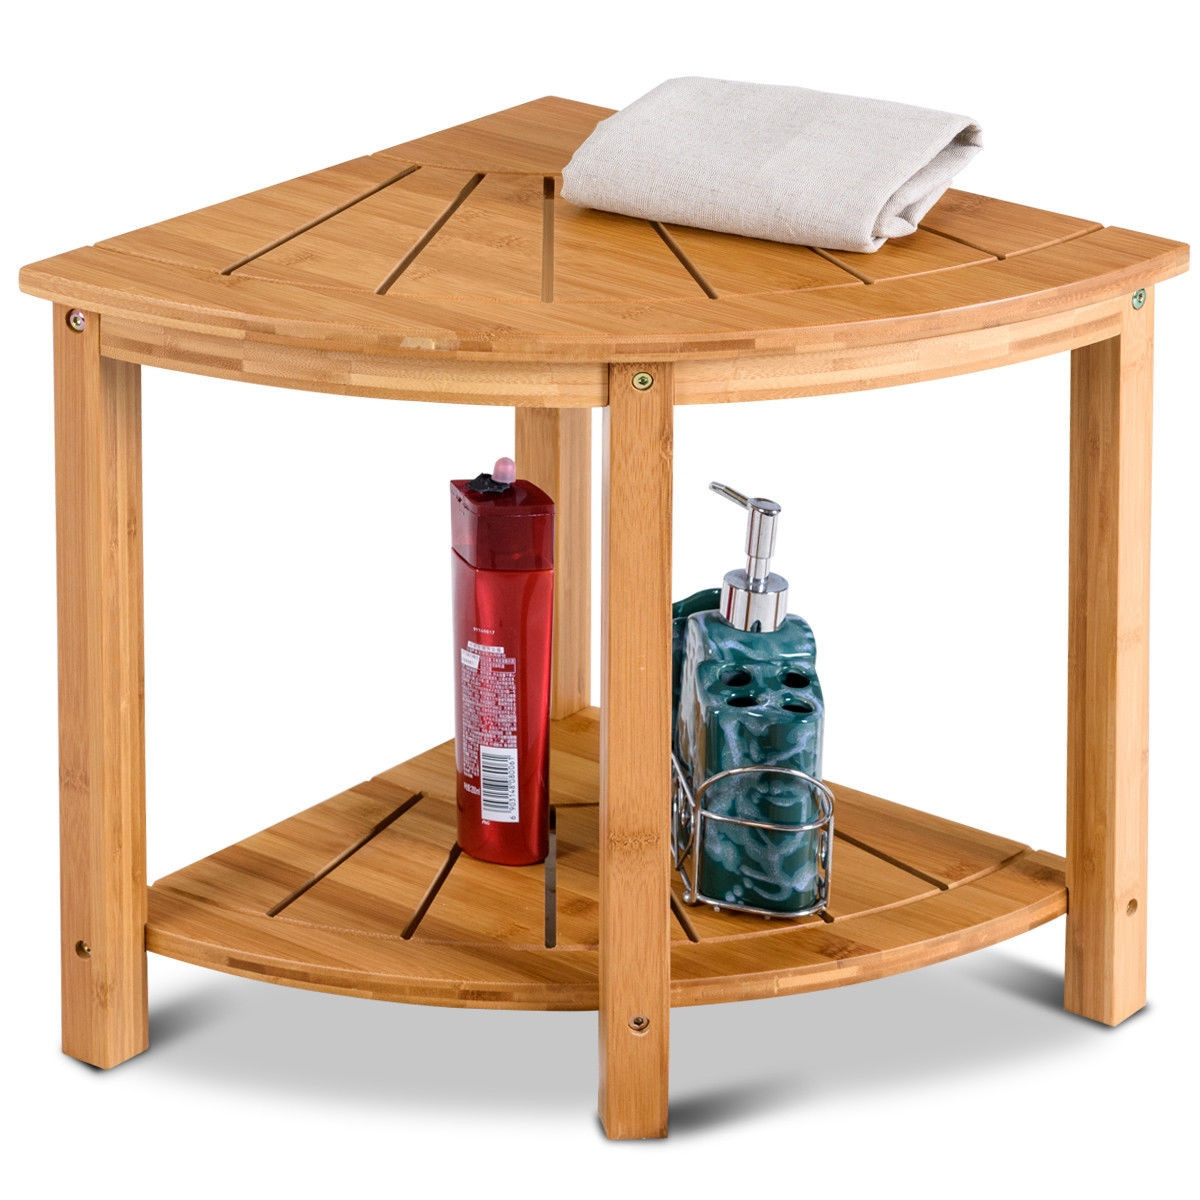 Small Corner Table For Bathroom
 Small Corner Shower Bench Wood Spa Seat Storage Shelf